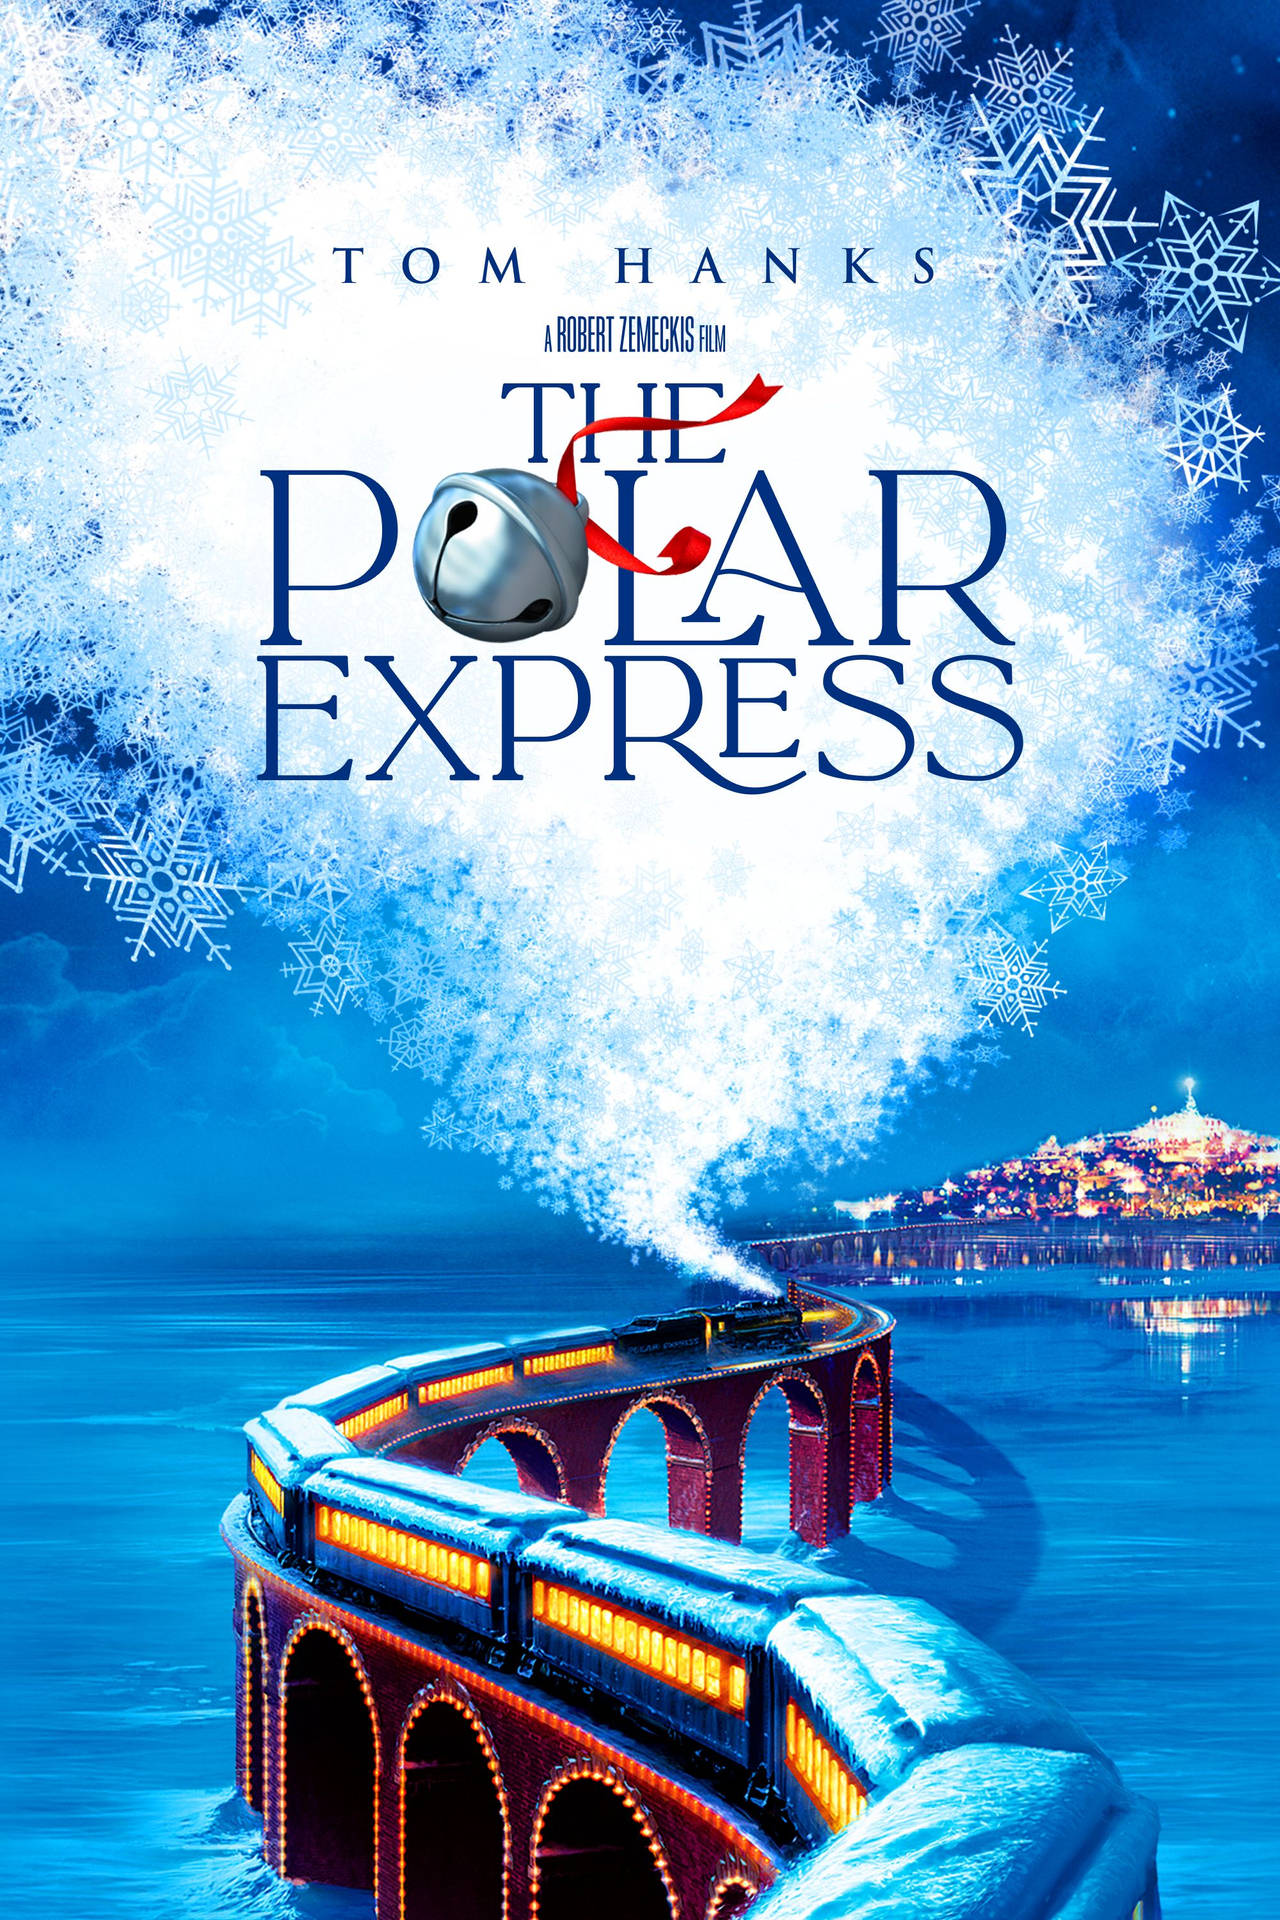 The Polar Express Movie Poster Wallpaper